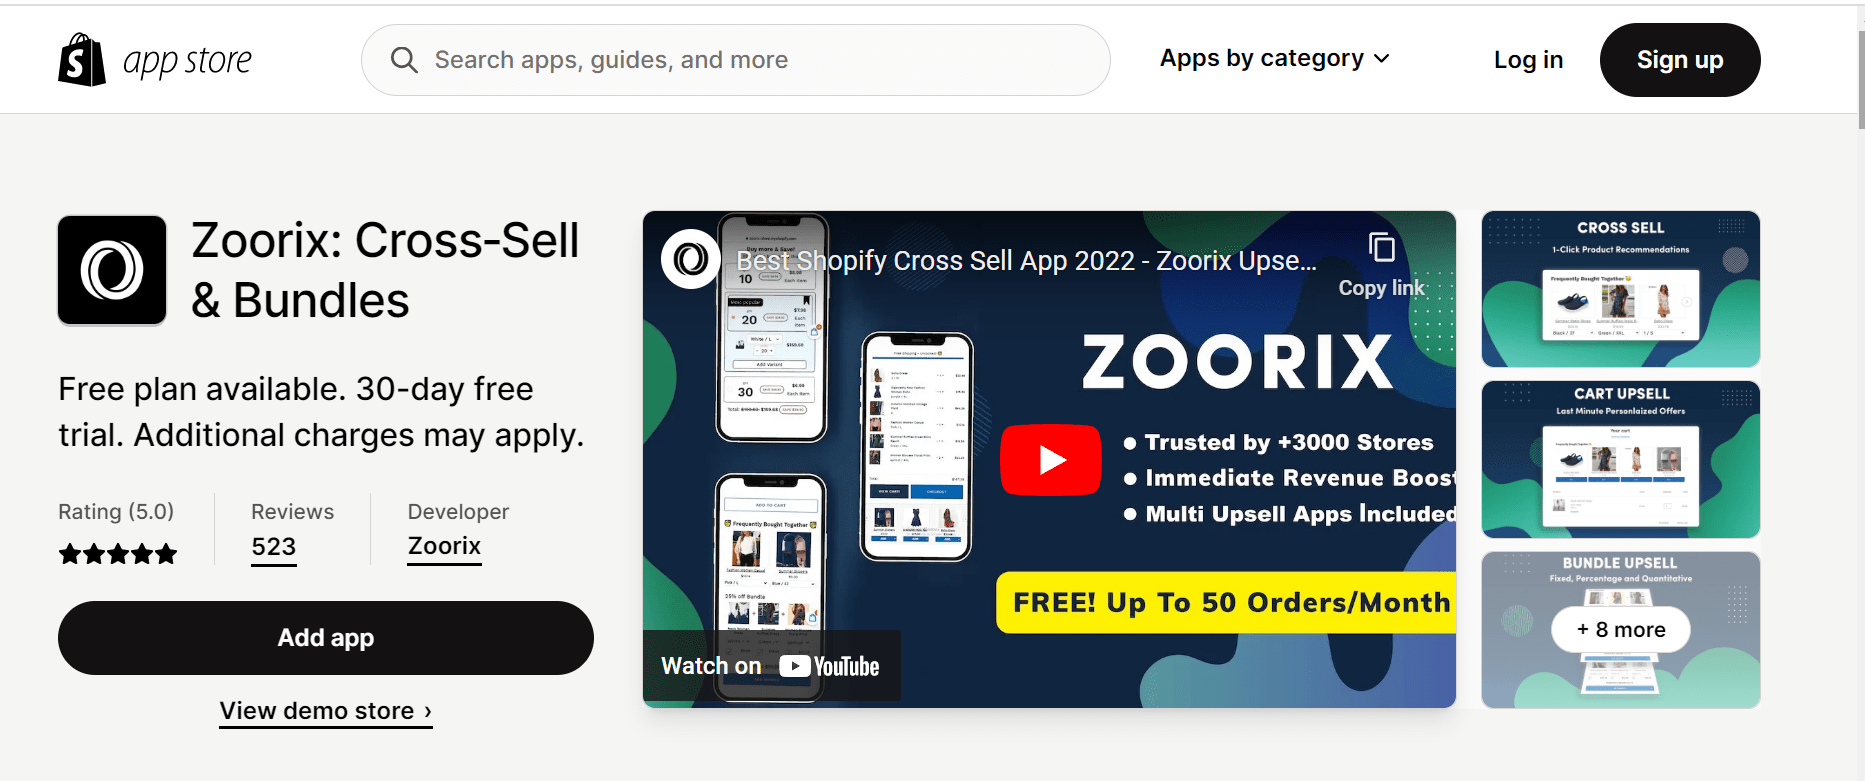 Zoorix Cross-sell app